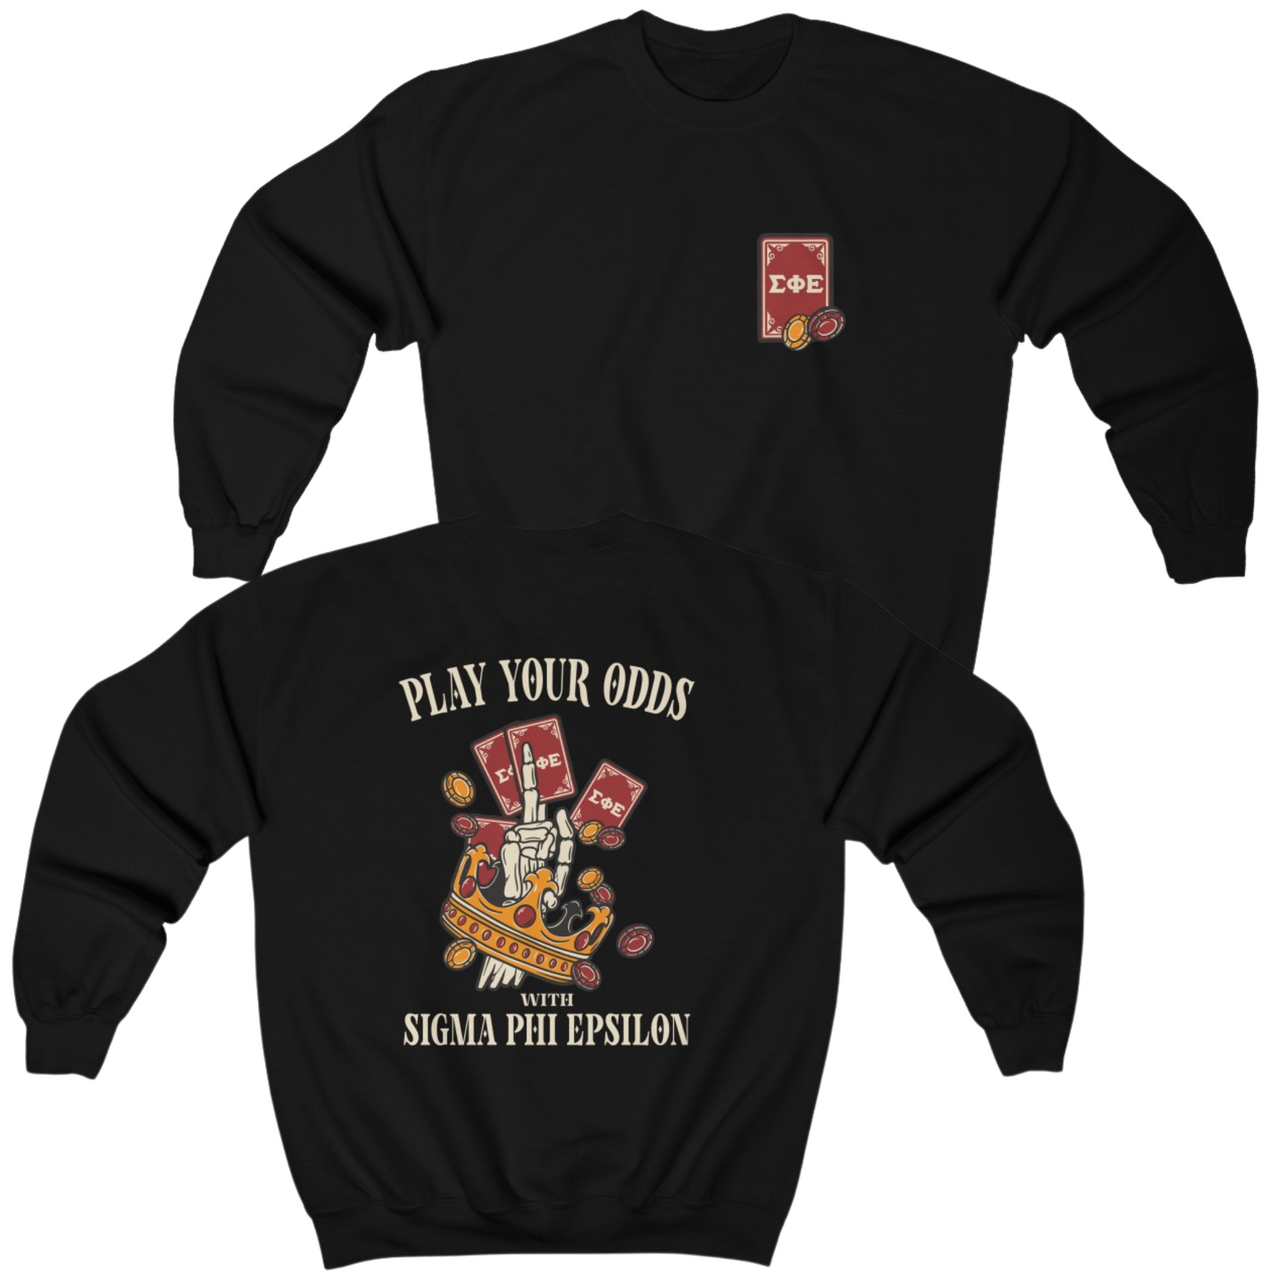 Black Sigma Phi Epsilon Graphic Crewneck Sweatshirt | Play Your Odds | SigEp Clothing - Campus Apparel 